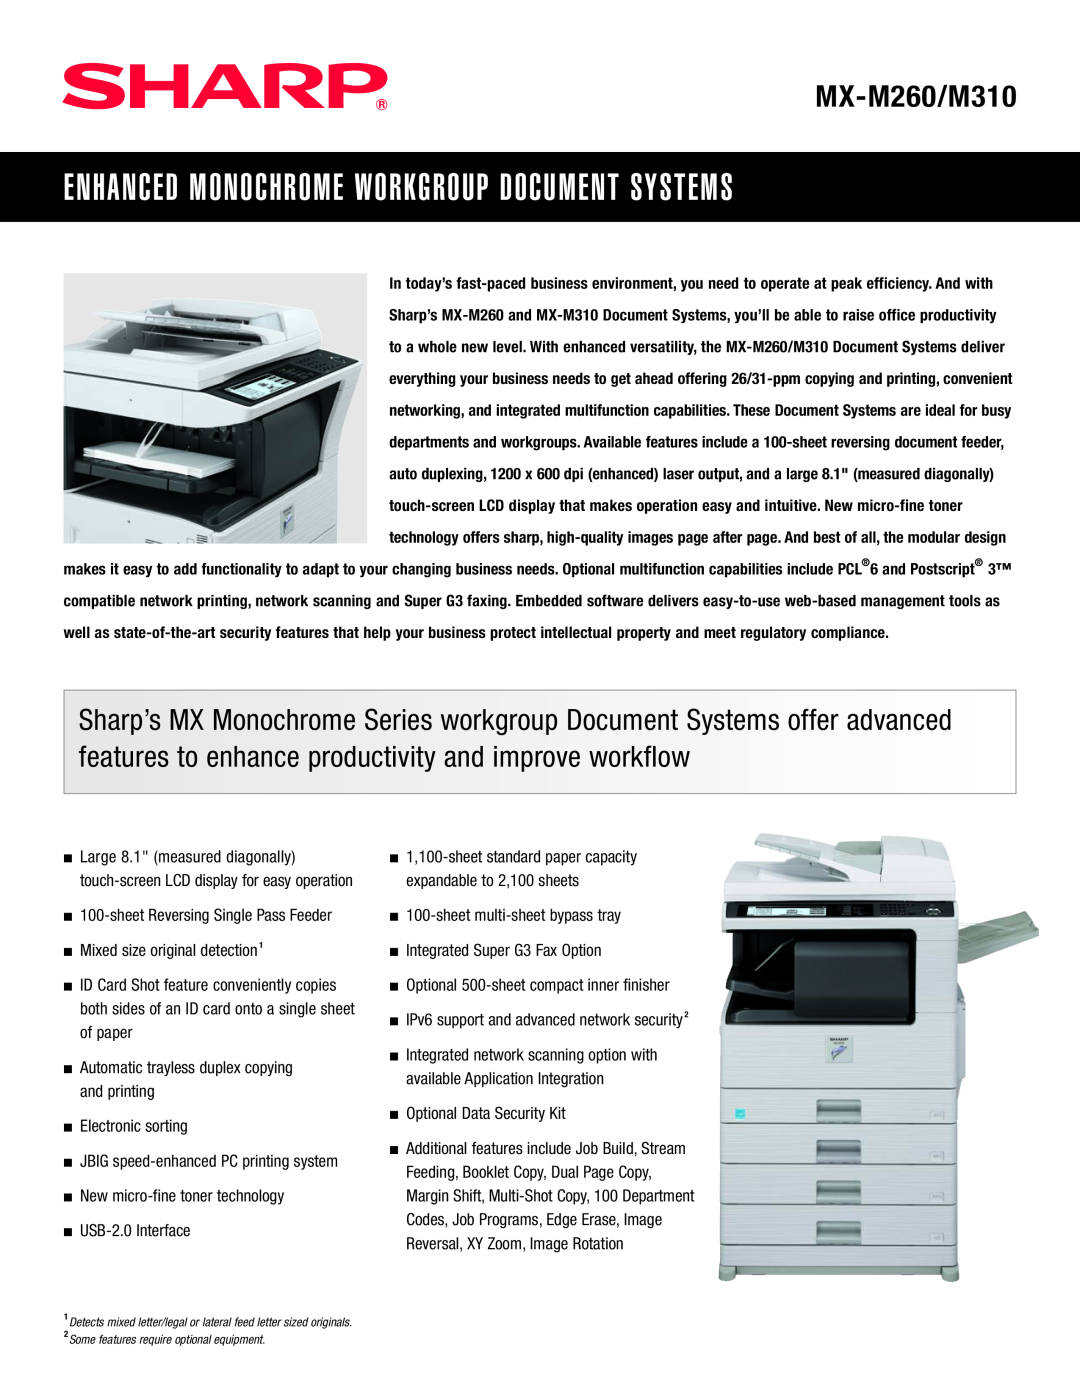 Sharp MX-FN13, AR-PF1 manual Enhanced Monochrome Workgroup Document Systems, MX-M260/M310, Mixed size original detection 